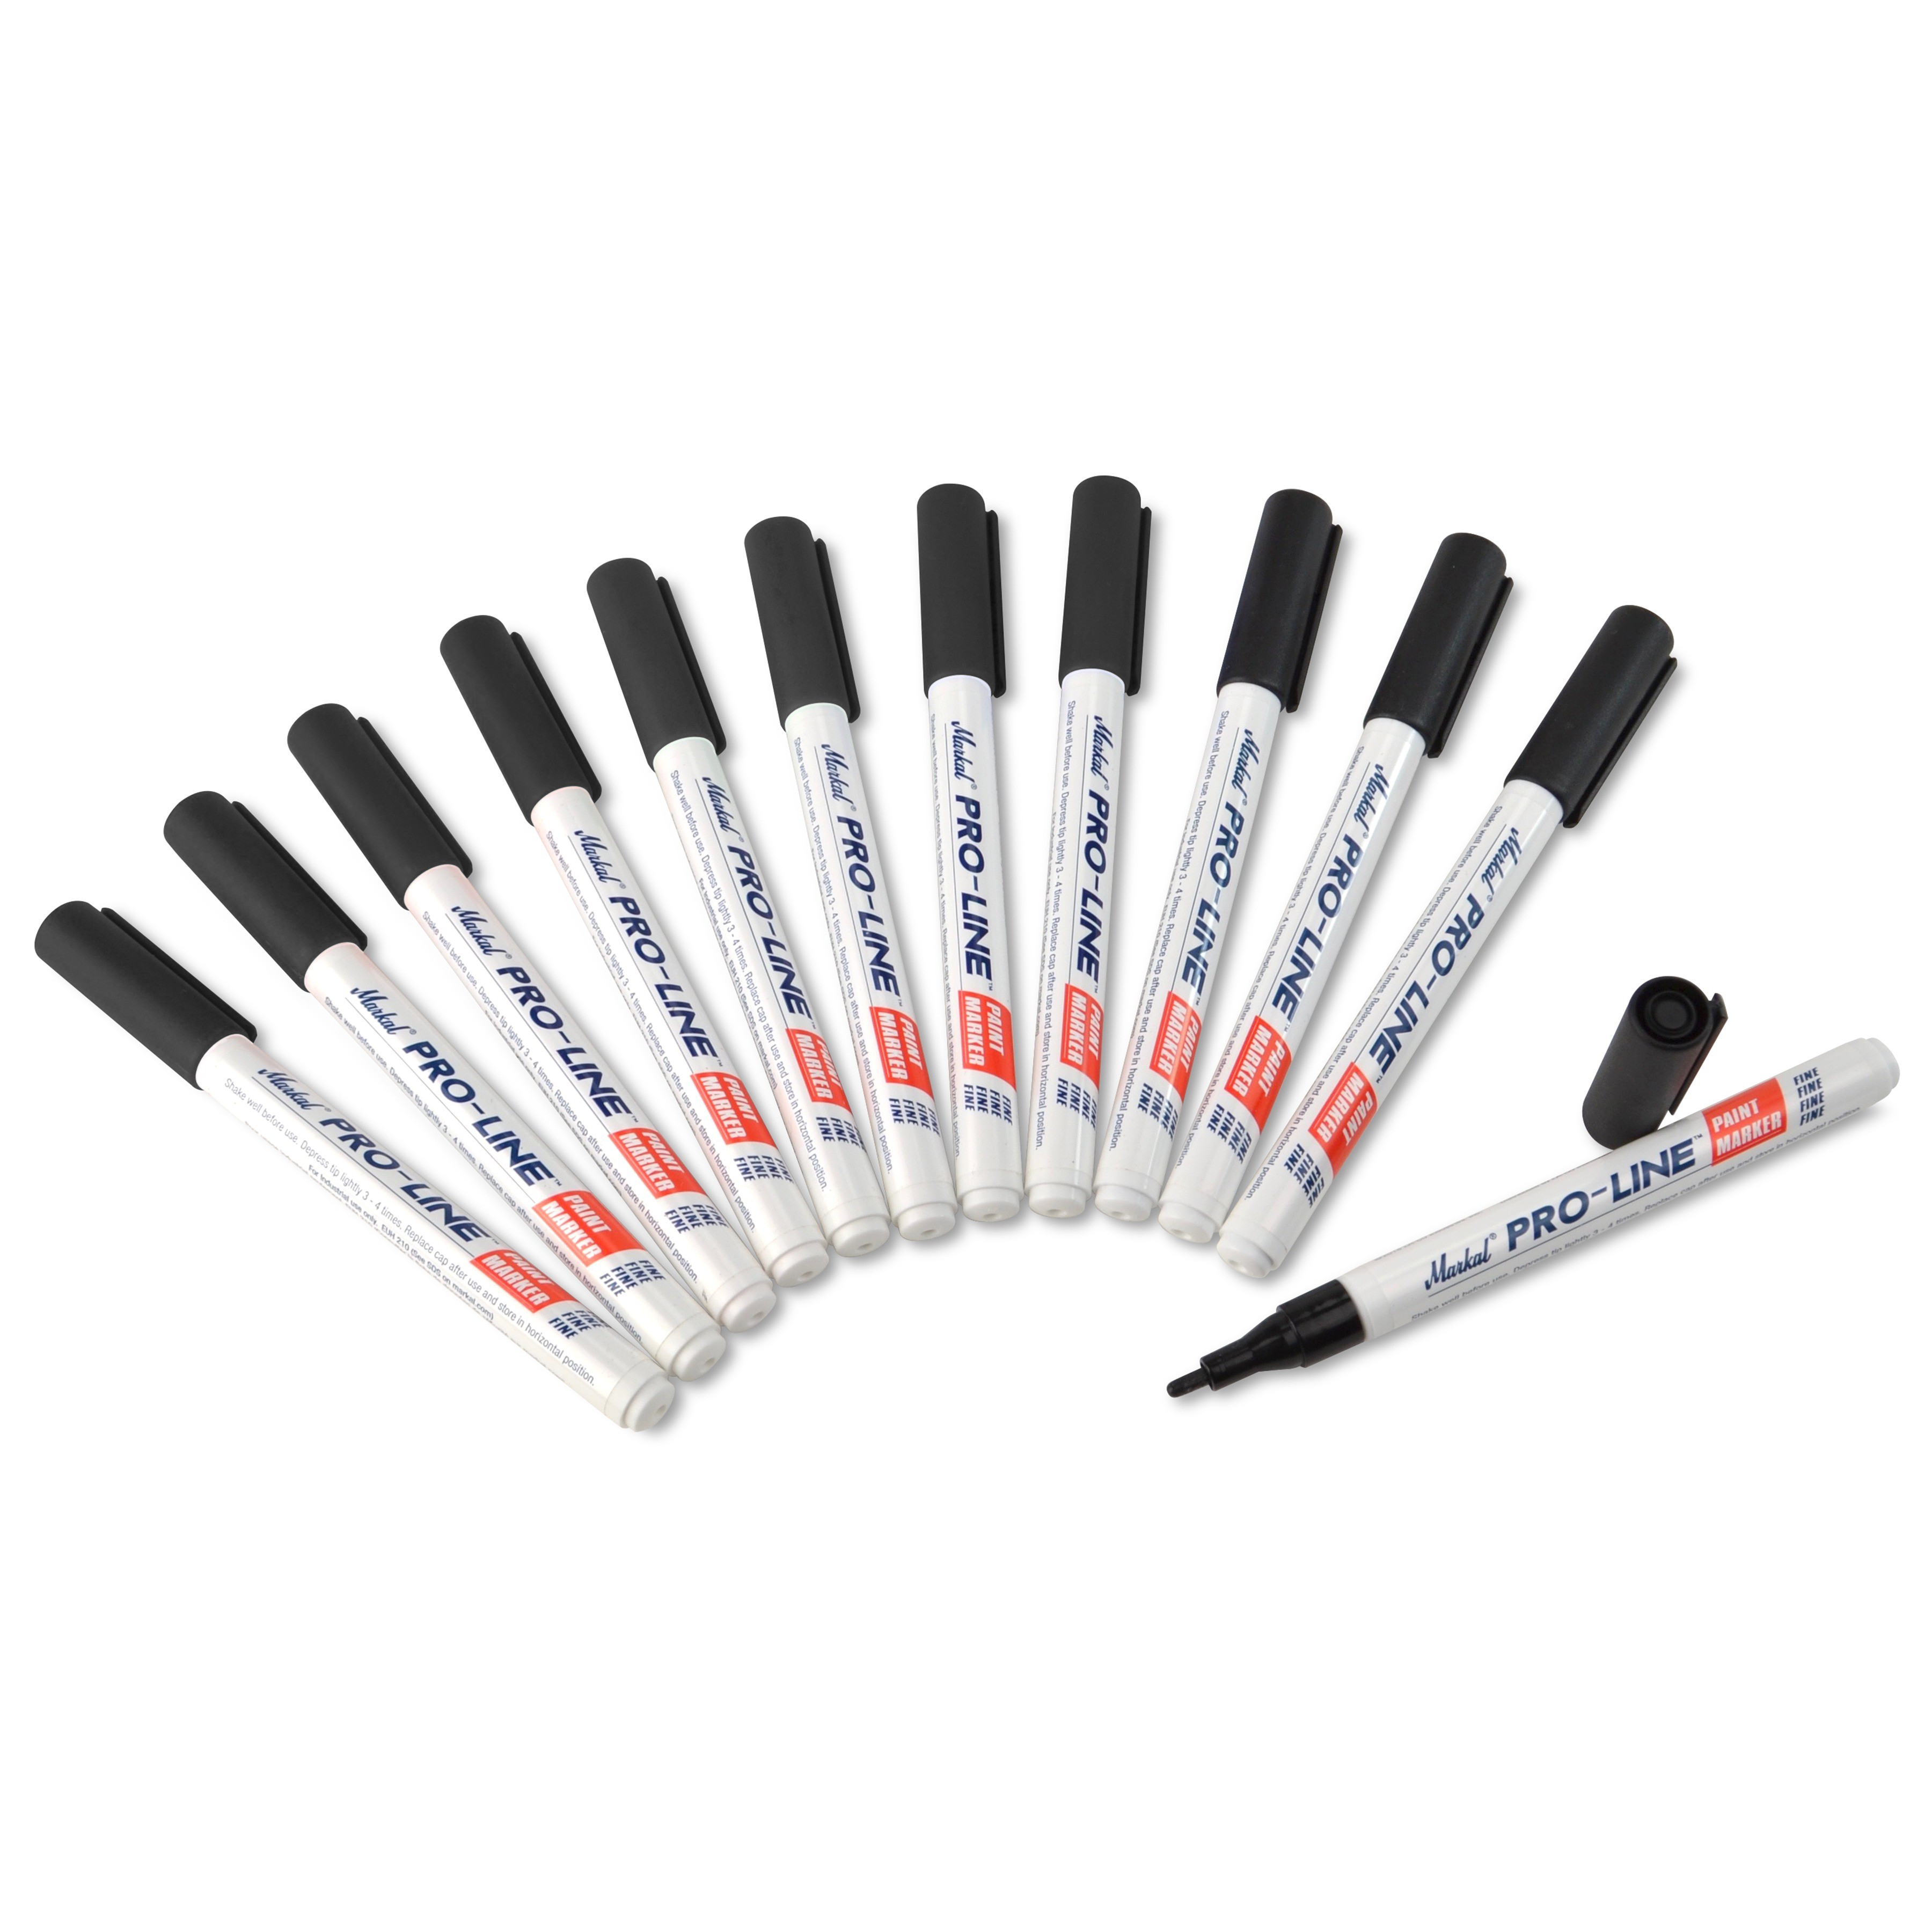 SP Bel-Art Black Solvent-Based Paint Pen Markers (Pack of 12)